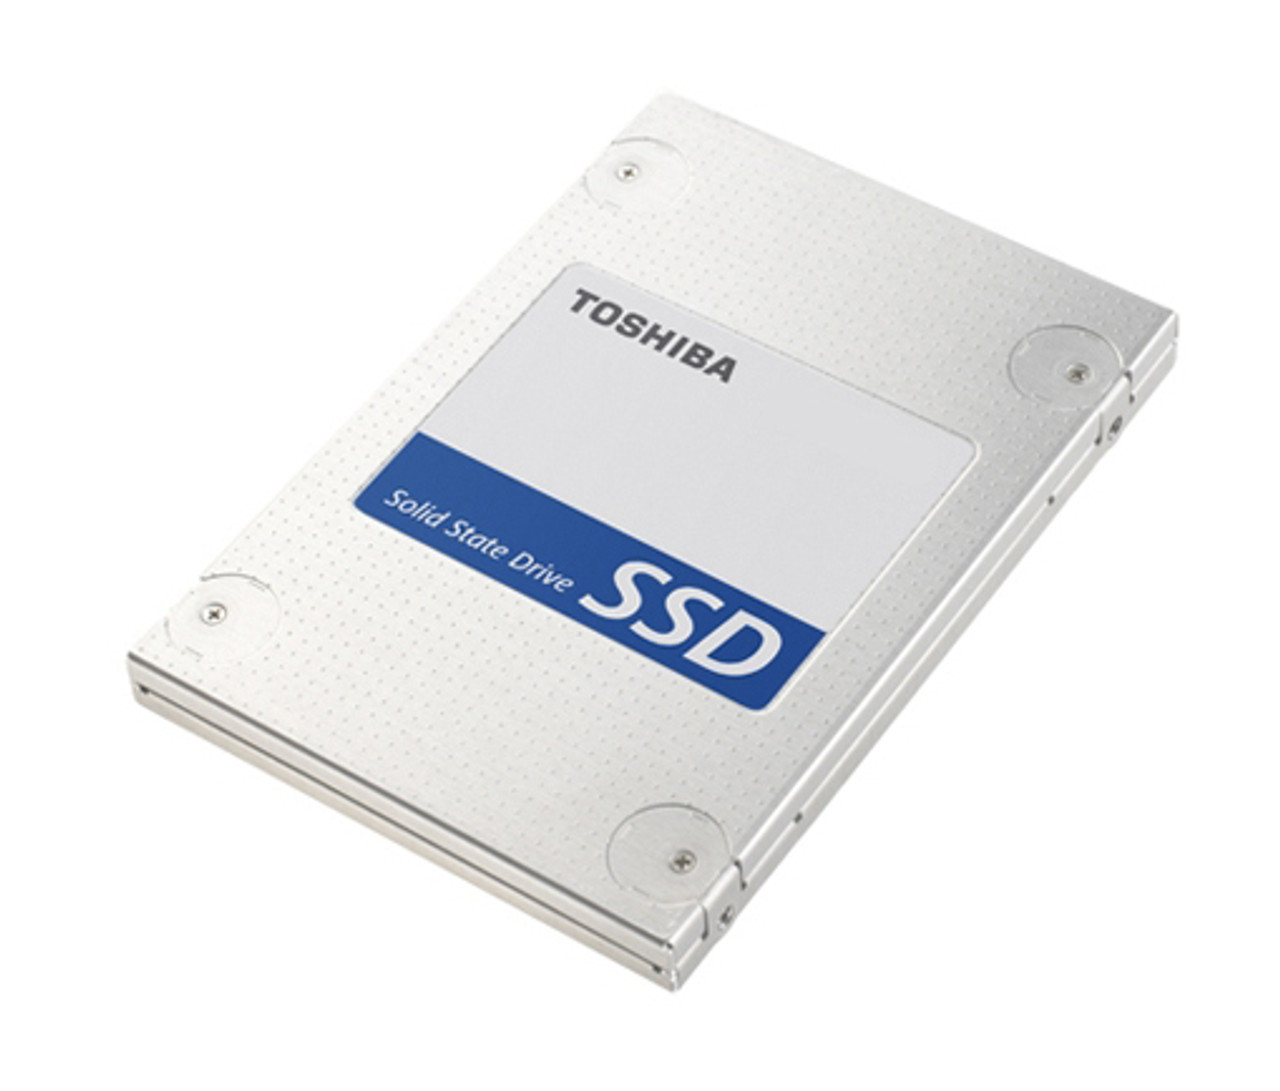 THNSNB030GMCJ06 Toshiba SG2 Series 30GB MLC SATA 3Gbps mSATA Internal Solid State Drive (SSD)